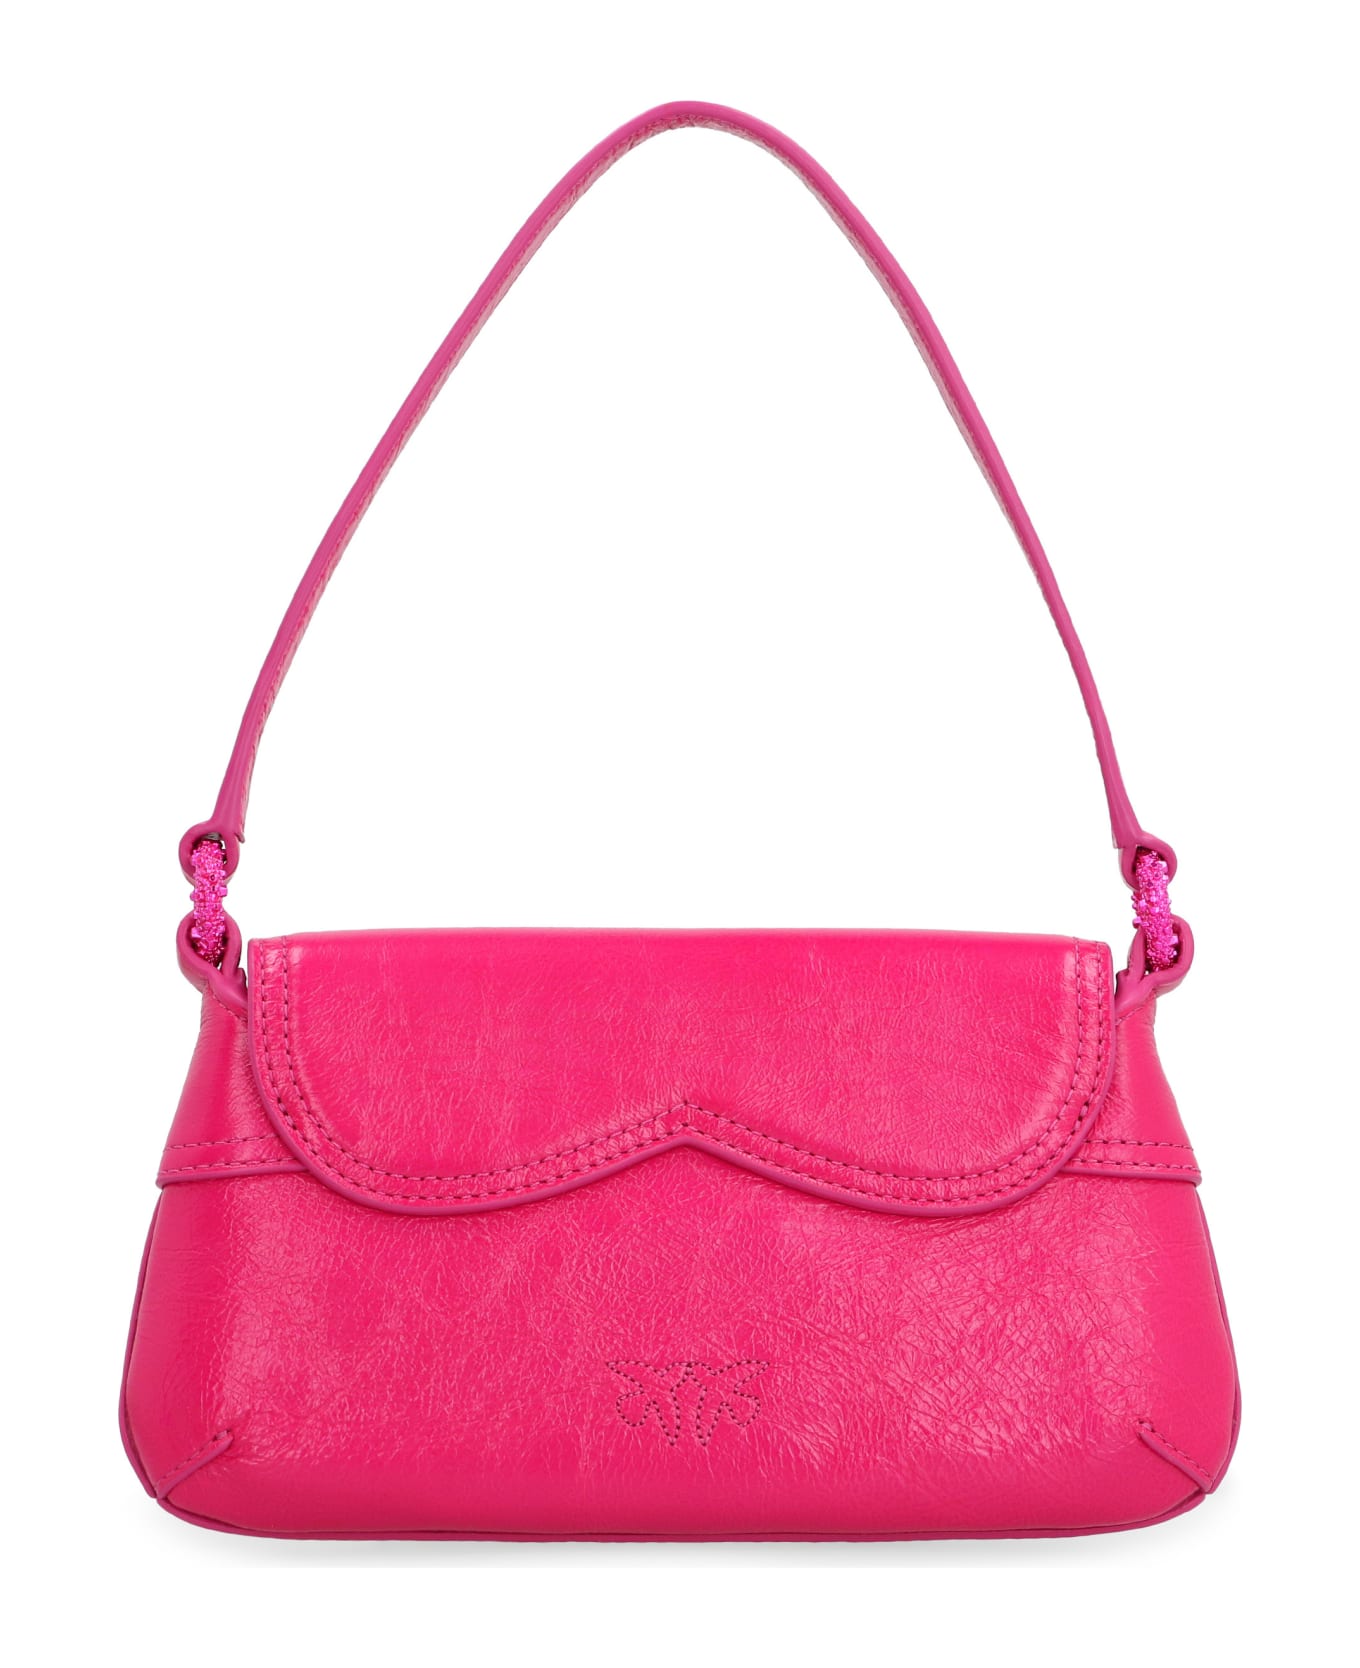 Pinko Baby 520 Bag Leather Bag - Fuchsia